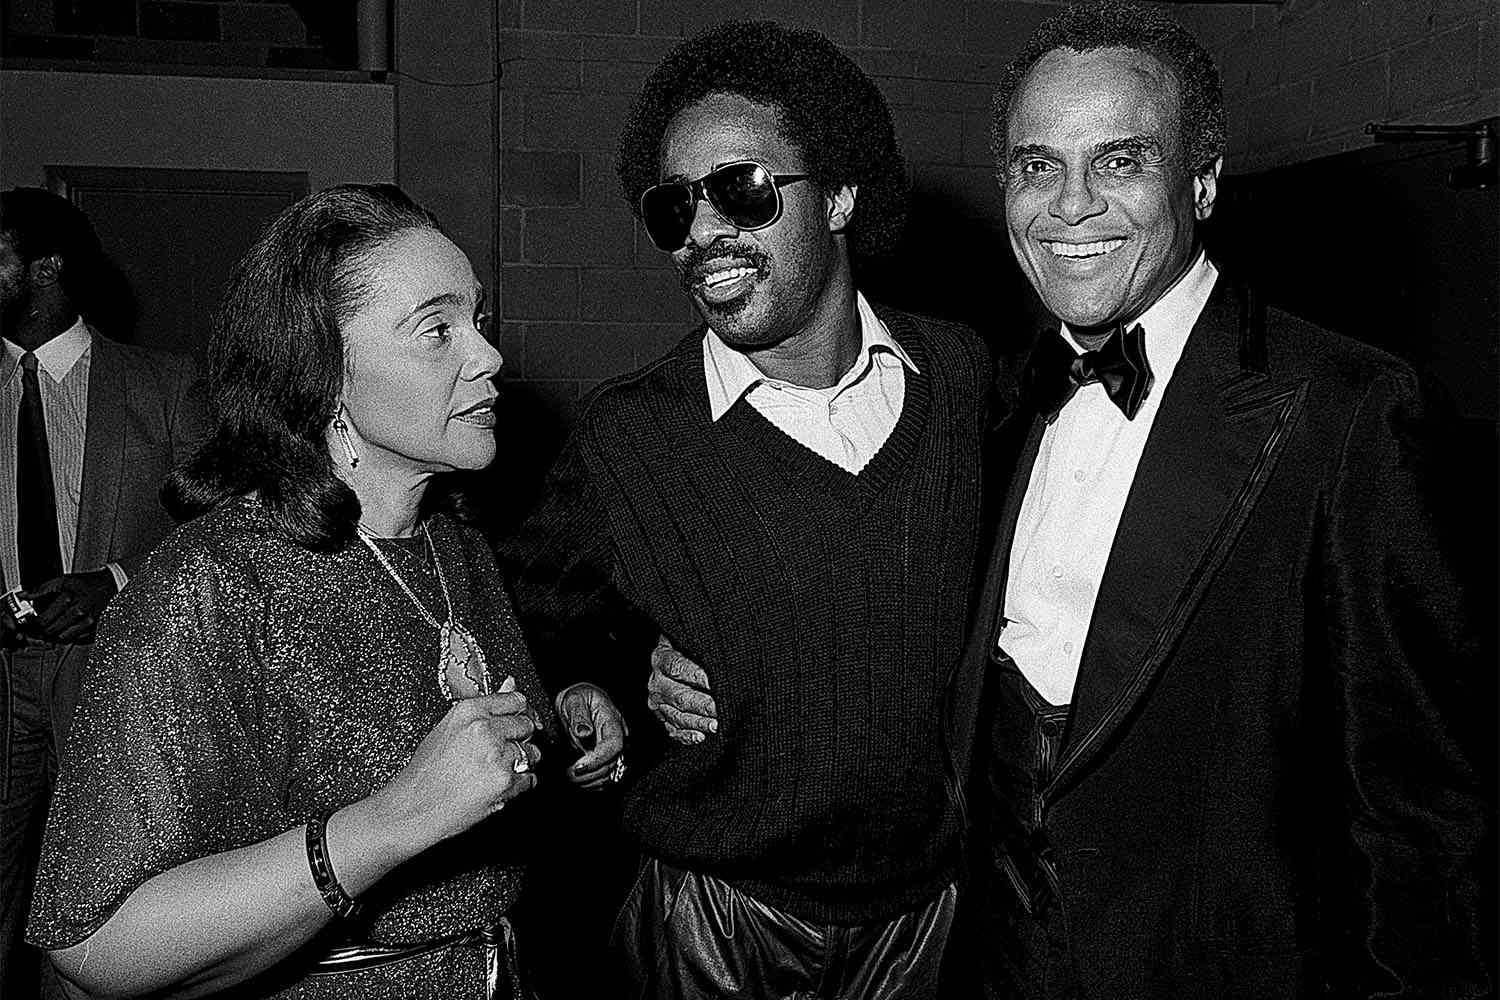 ATLANTA JANUARY 01: Coretta Scott King, Stevie Wonder and Harry Belafonte during M.L.K Gala at The Atlanta Civic Center in Atlanta Georgia, January 01, 1982 (Photo by Rick Diamond/Getty Images